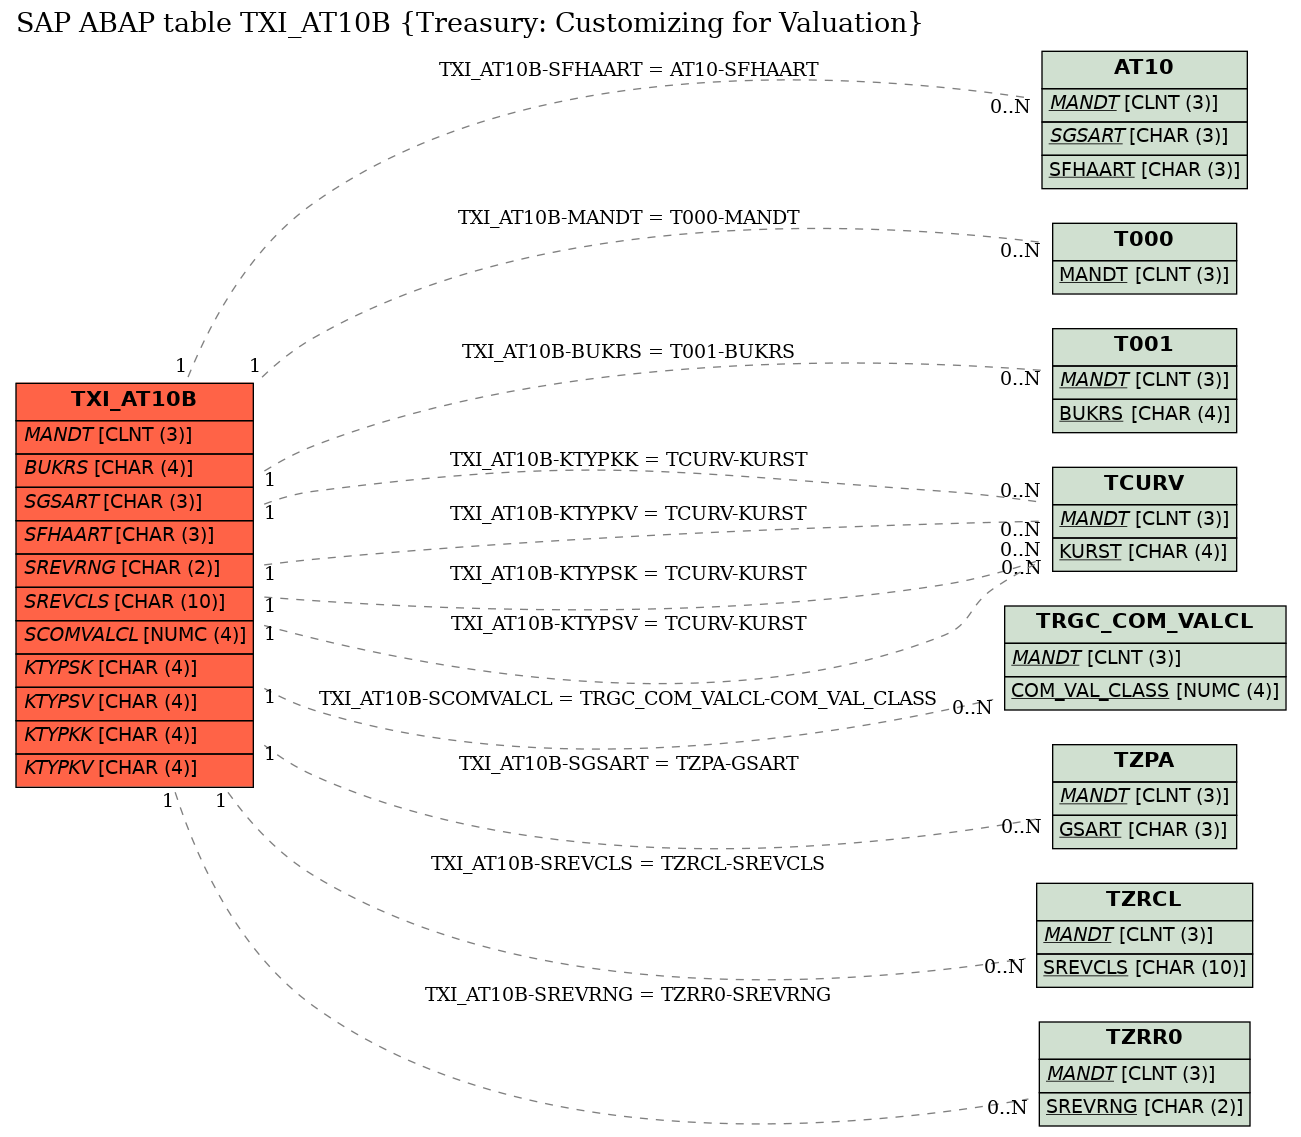 E-R Diagram for table TXI_AT10B (Treasury: Customizing for Valuation)